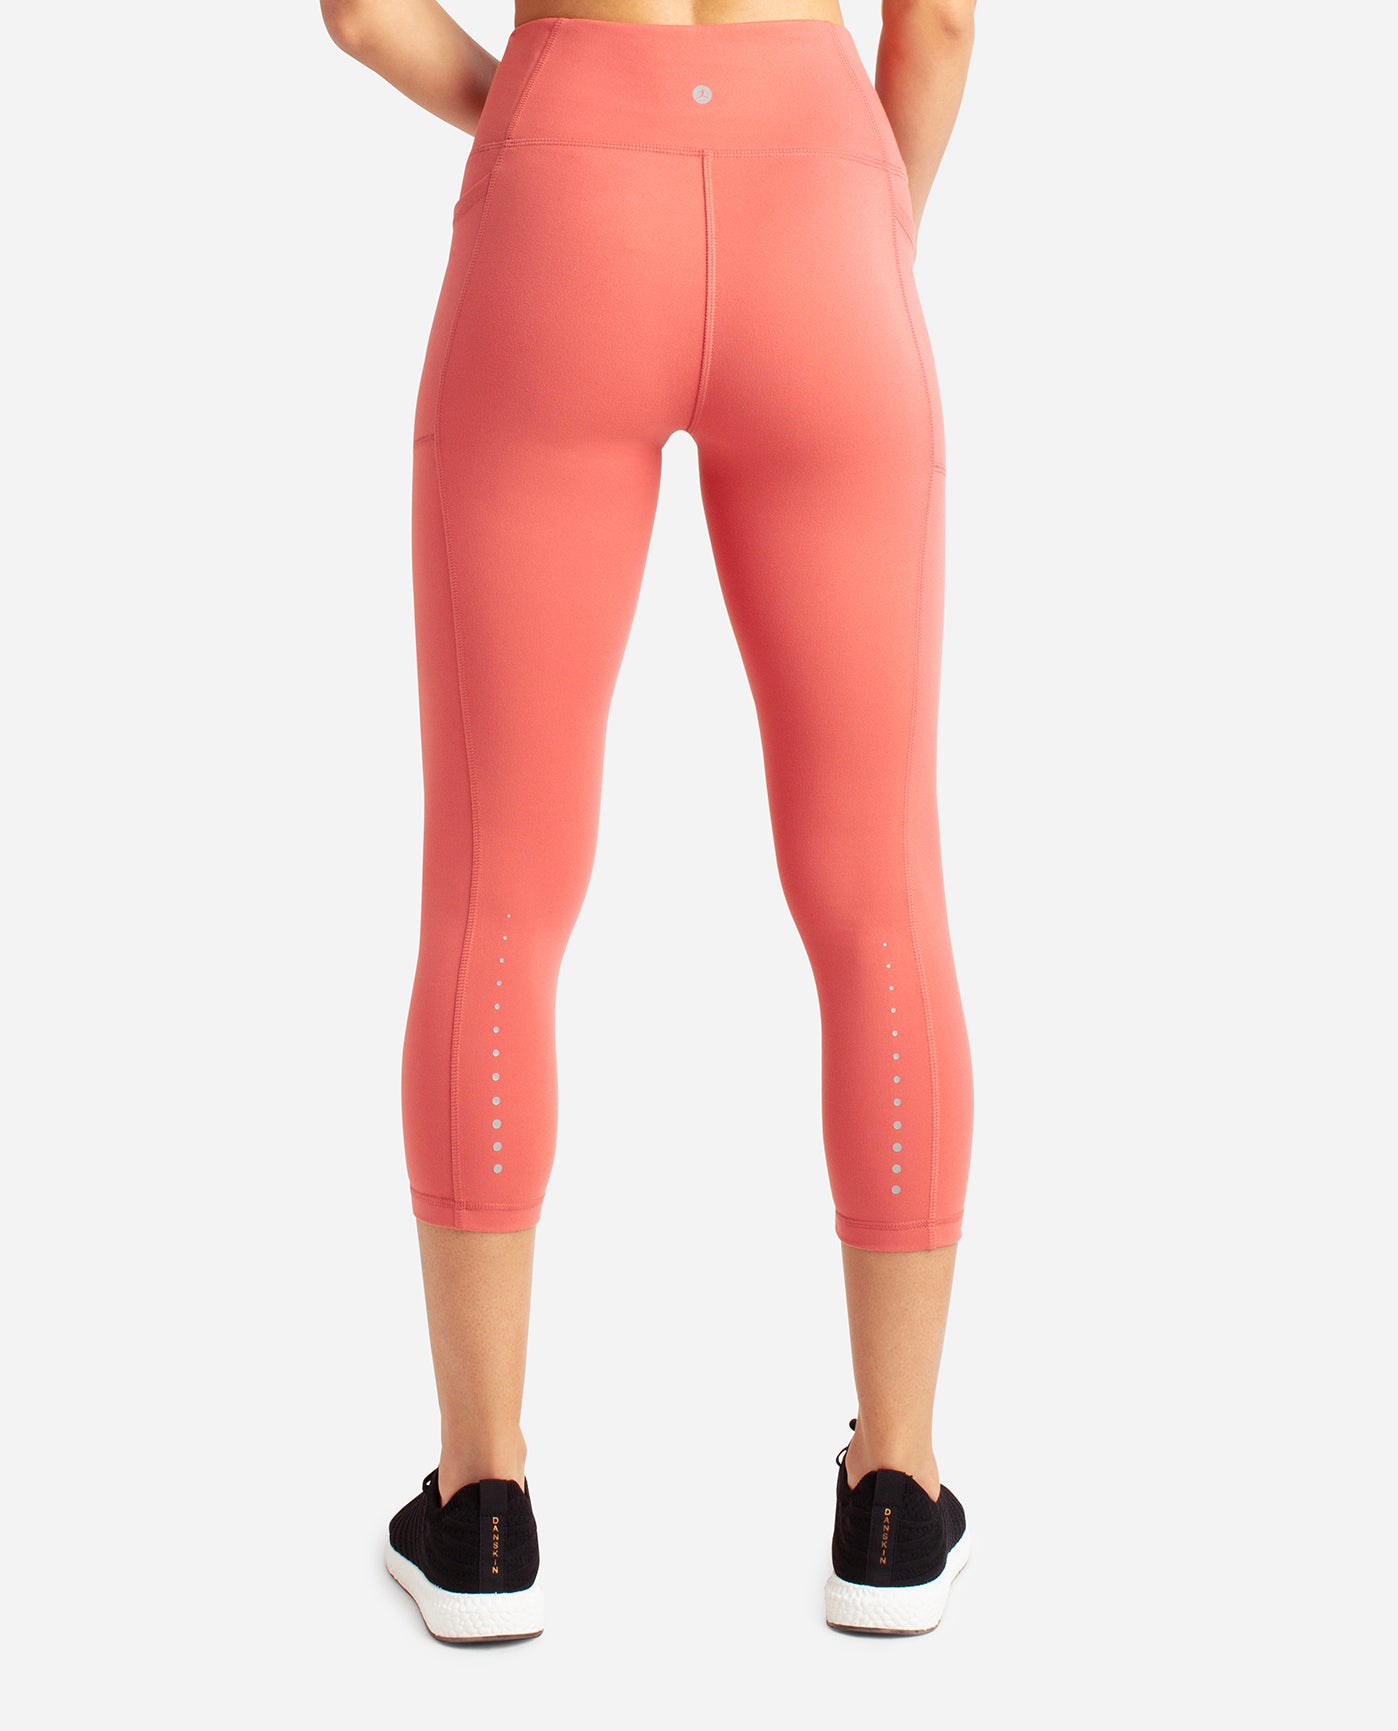 High Waist Lycra Danskin Petite Yoga Pants For Women Solid Color